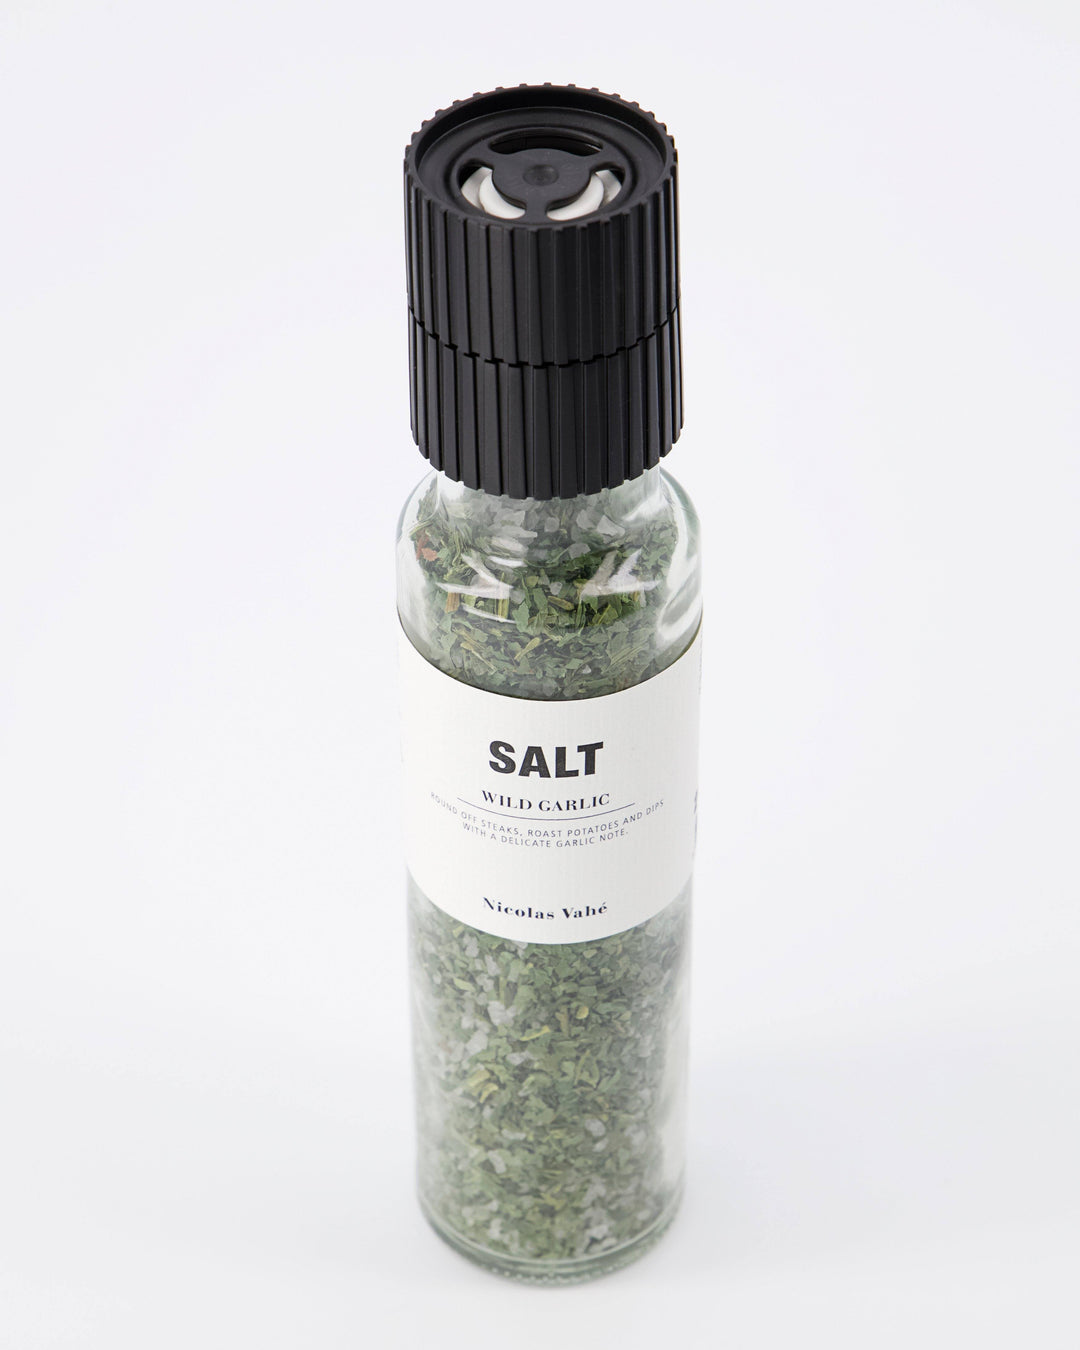 Nicolas Vahe - Salt - Wild Garlic Salt 